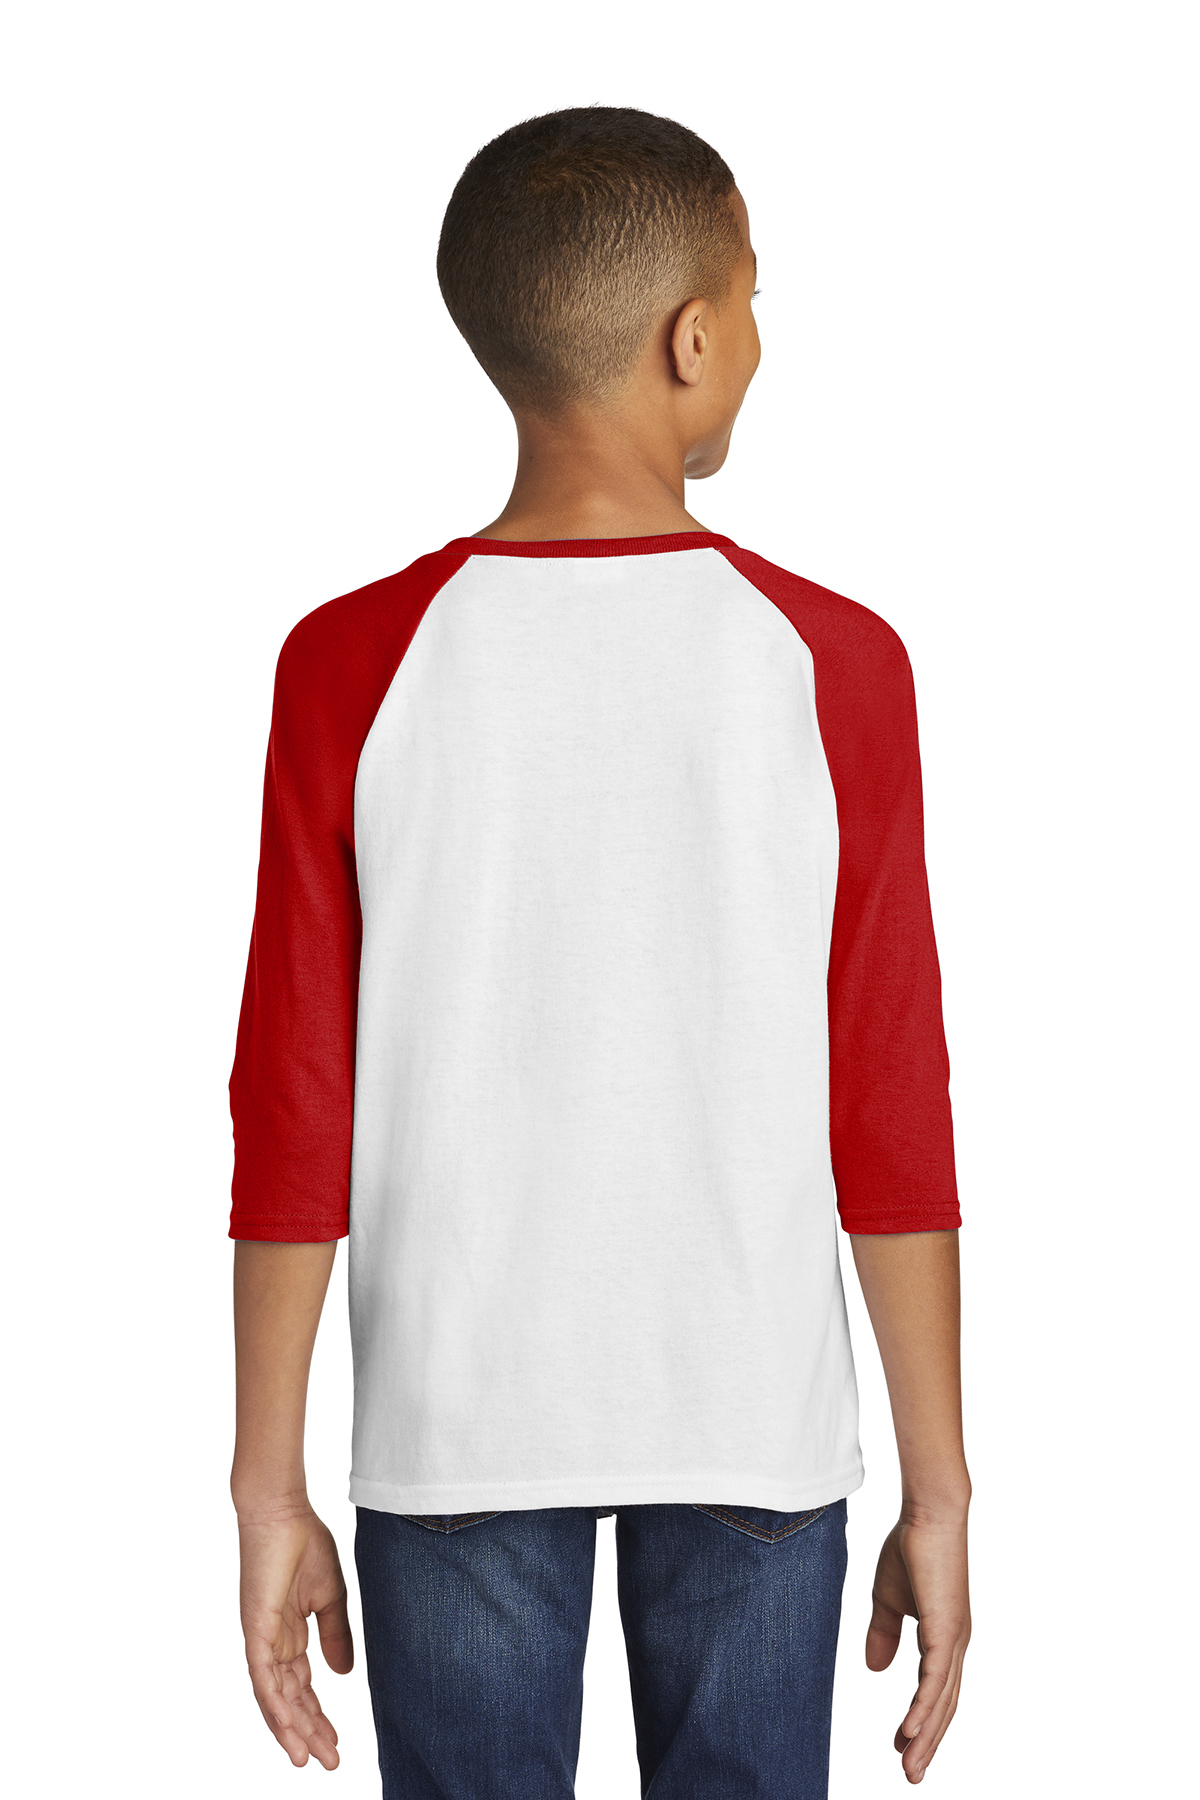 Add Your Custom Text Custom Front 3/4-Sleeve Raglan Baseball T-Shirt Unisex, Youth/Adult 